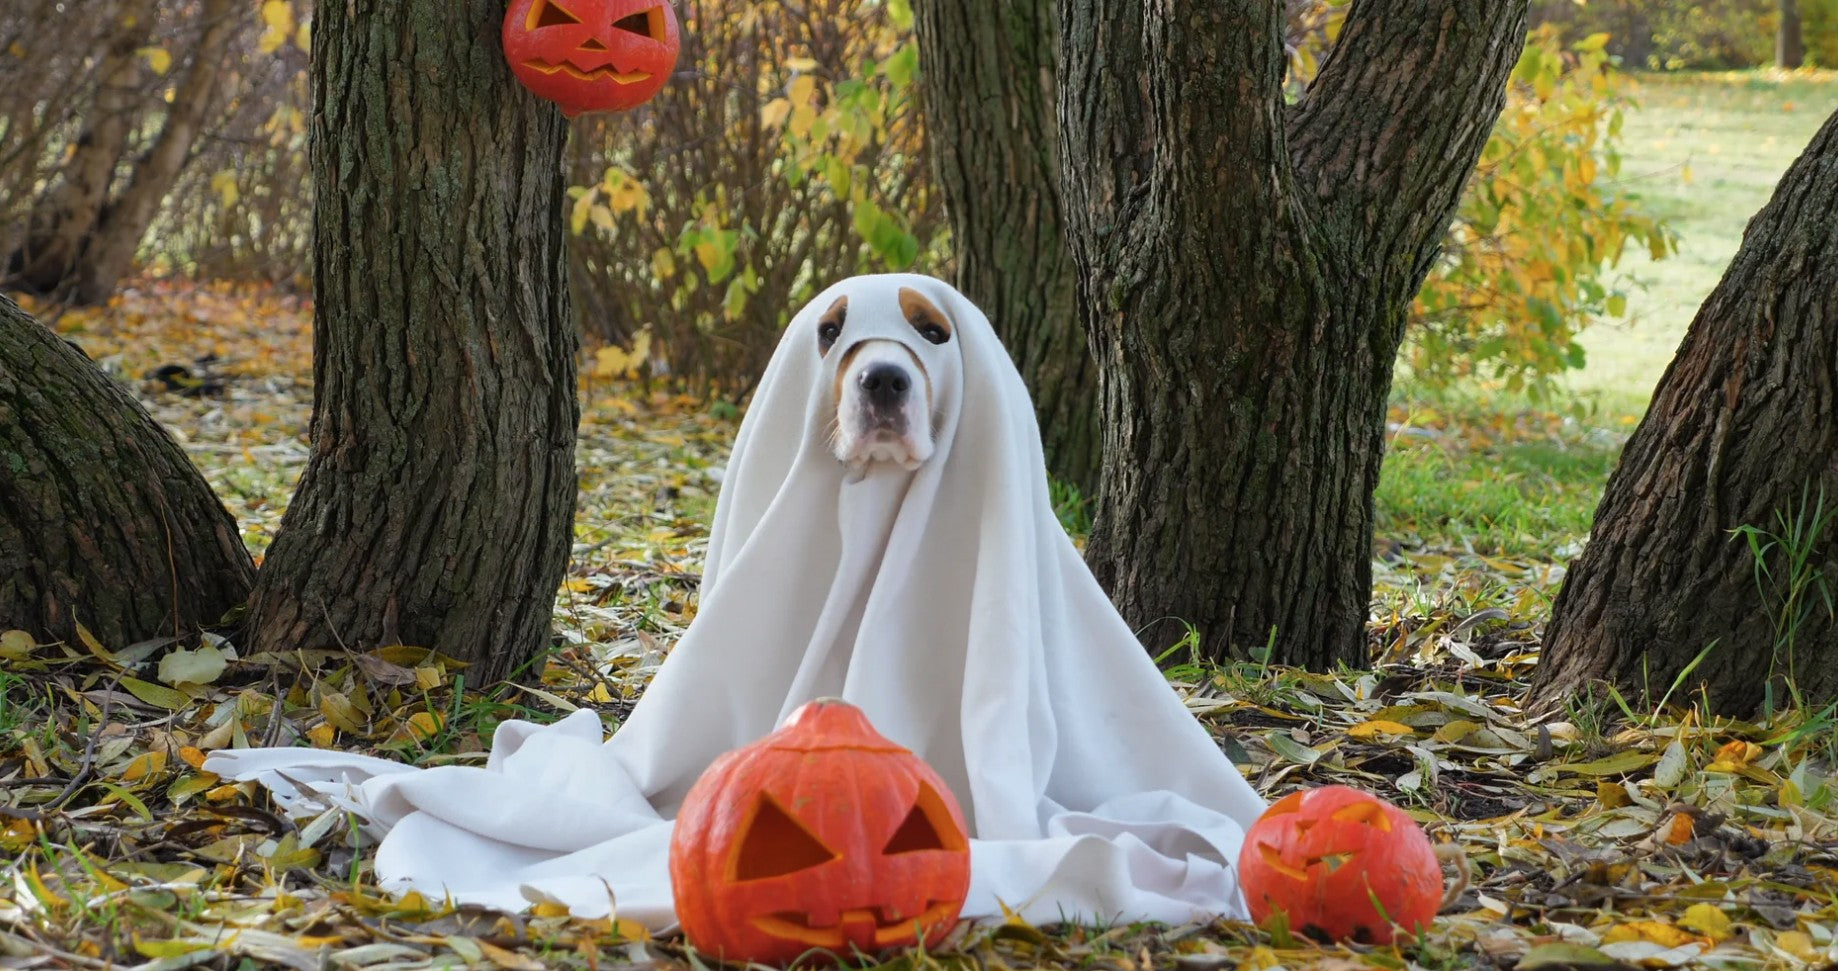 Have a Kooky Spooky Halloween!